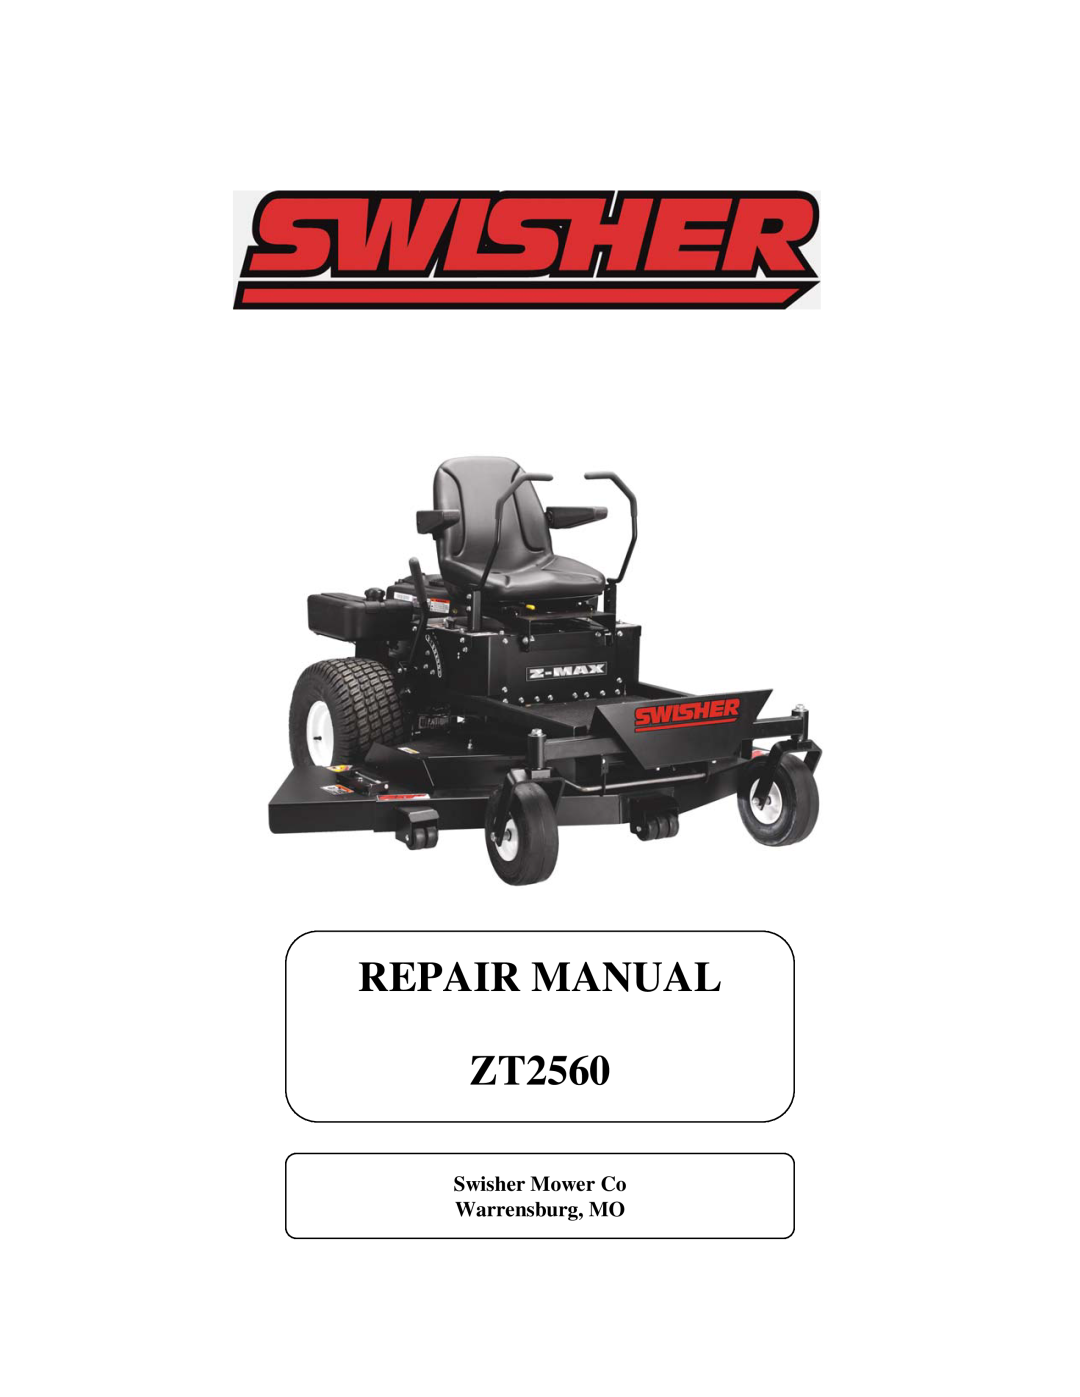 Swisher ZT2560 manual Repair Manual, Swisher Mower Co Warrensburg, MO 